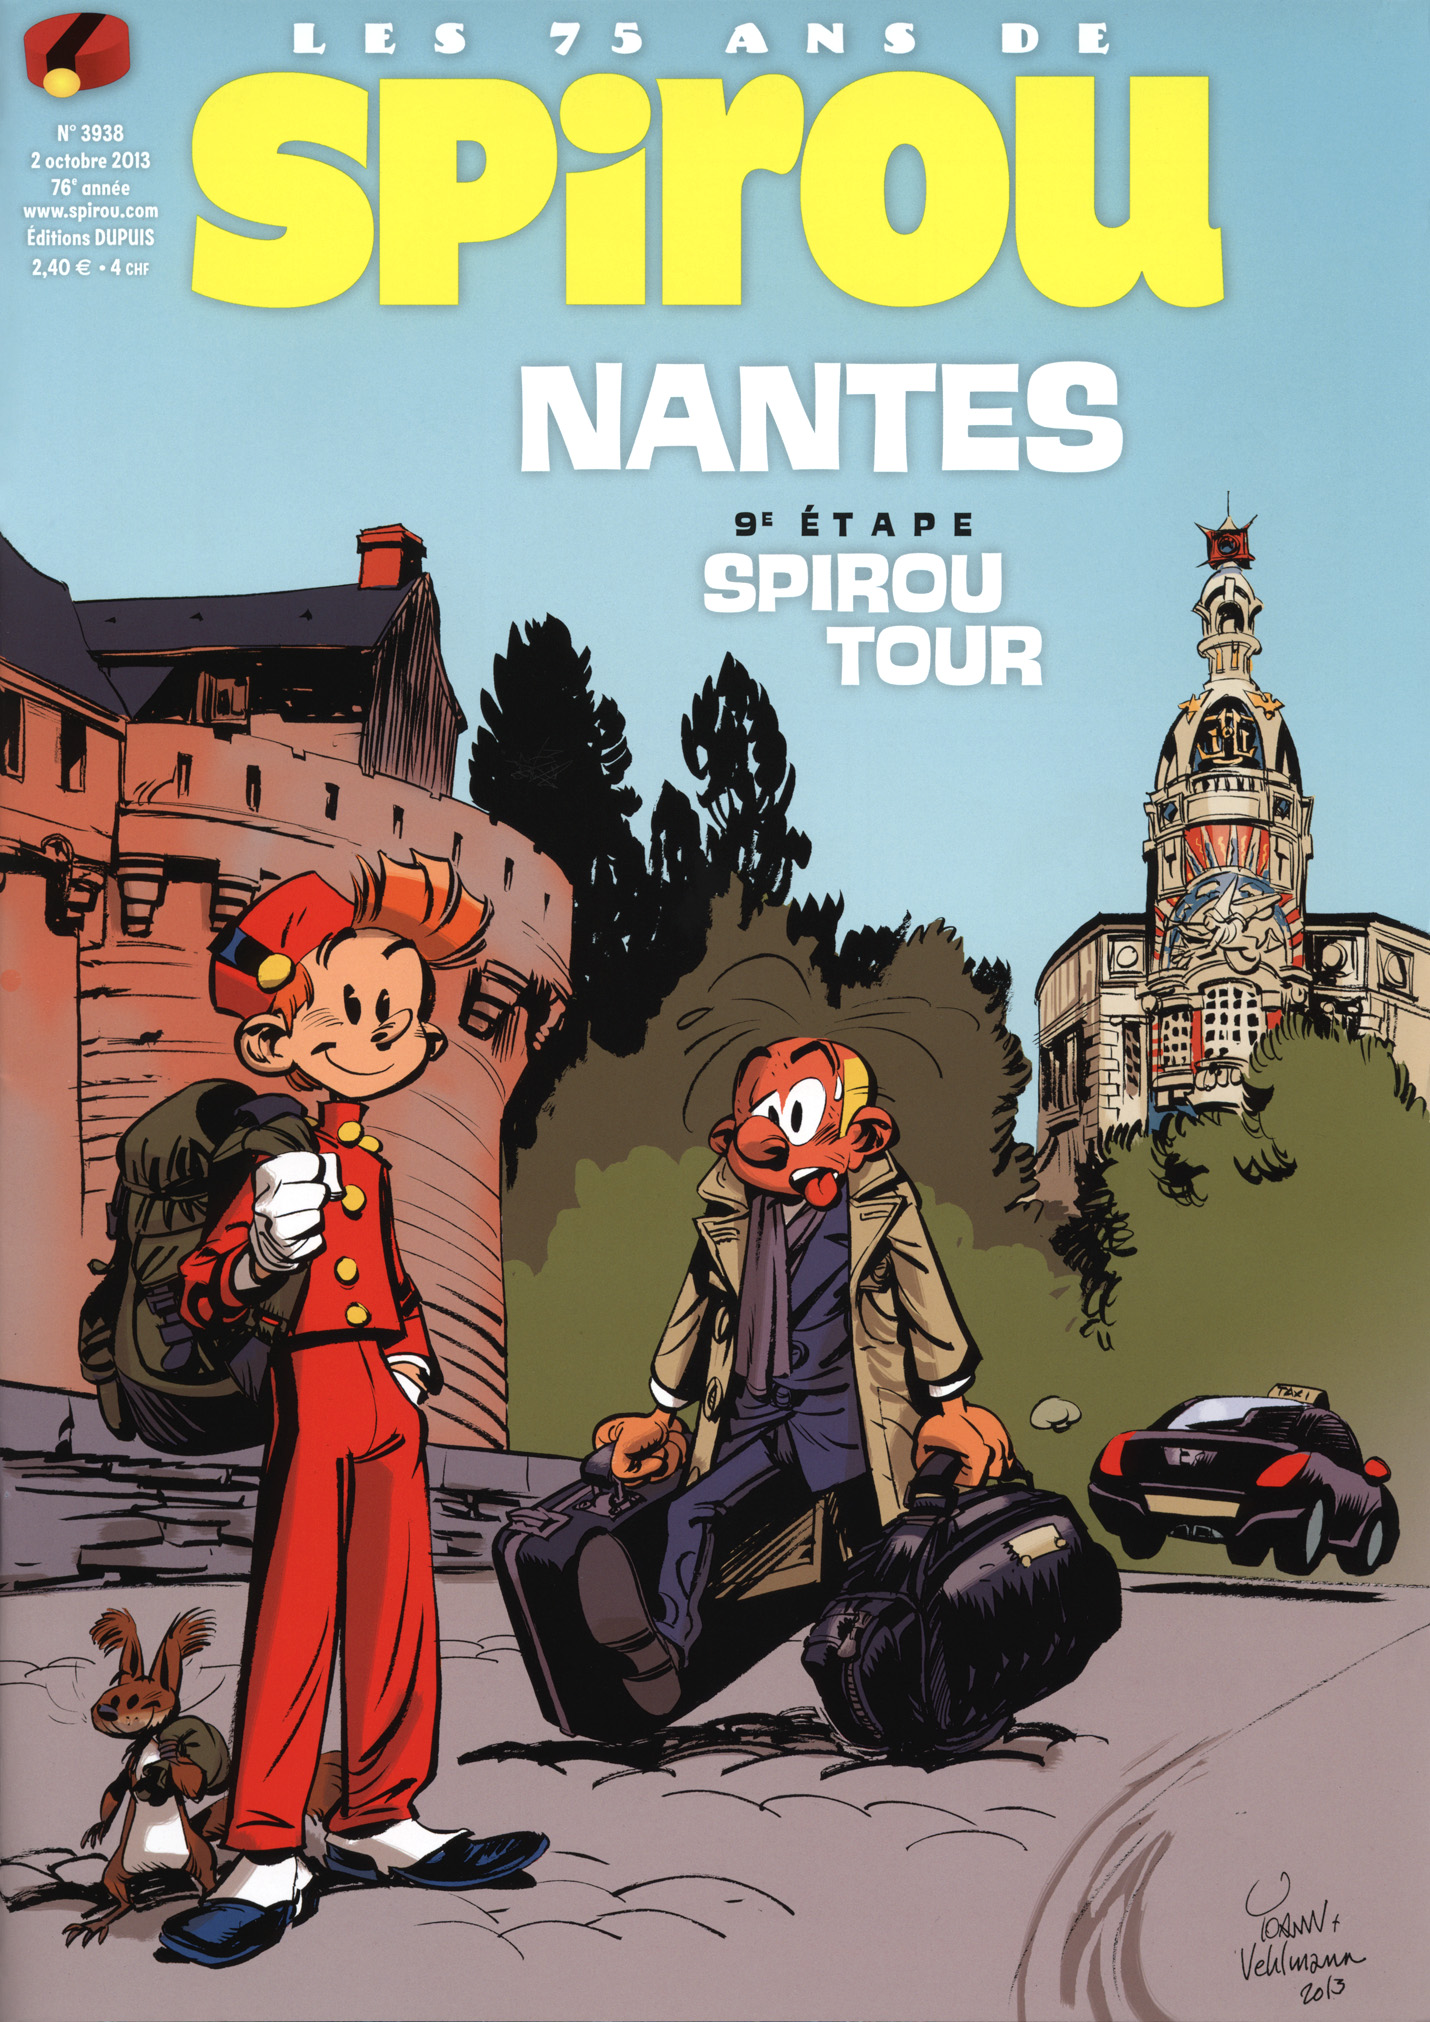 Journal de Spirou #3938 cover (ill. Yoann, Vehlmann; (c) Dupuis)